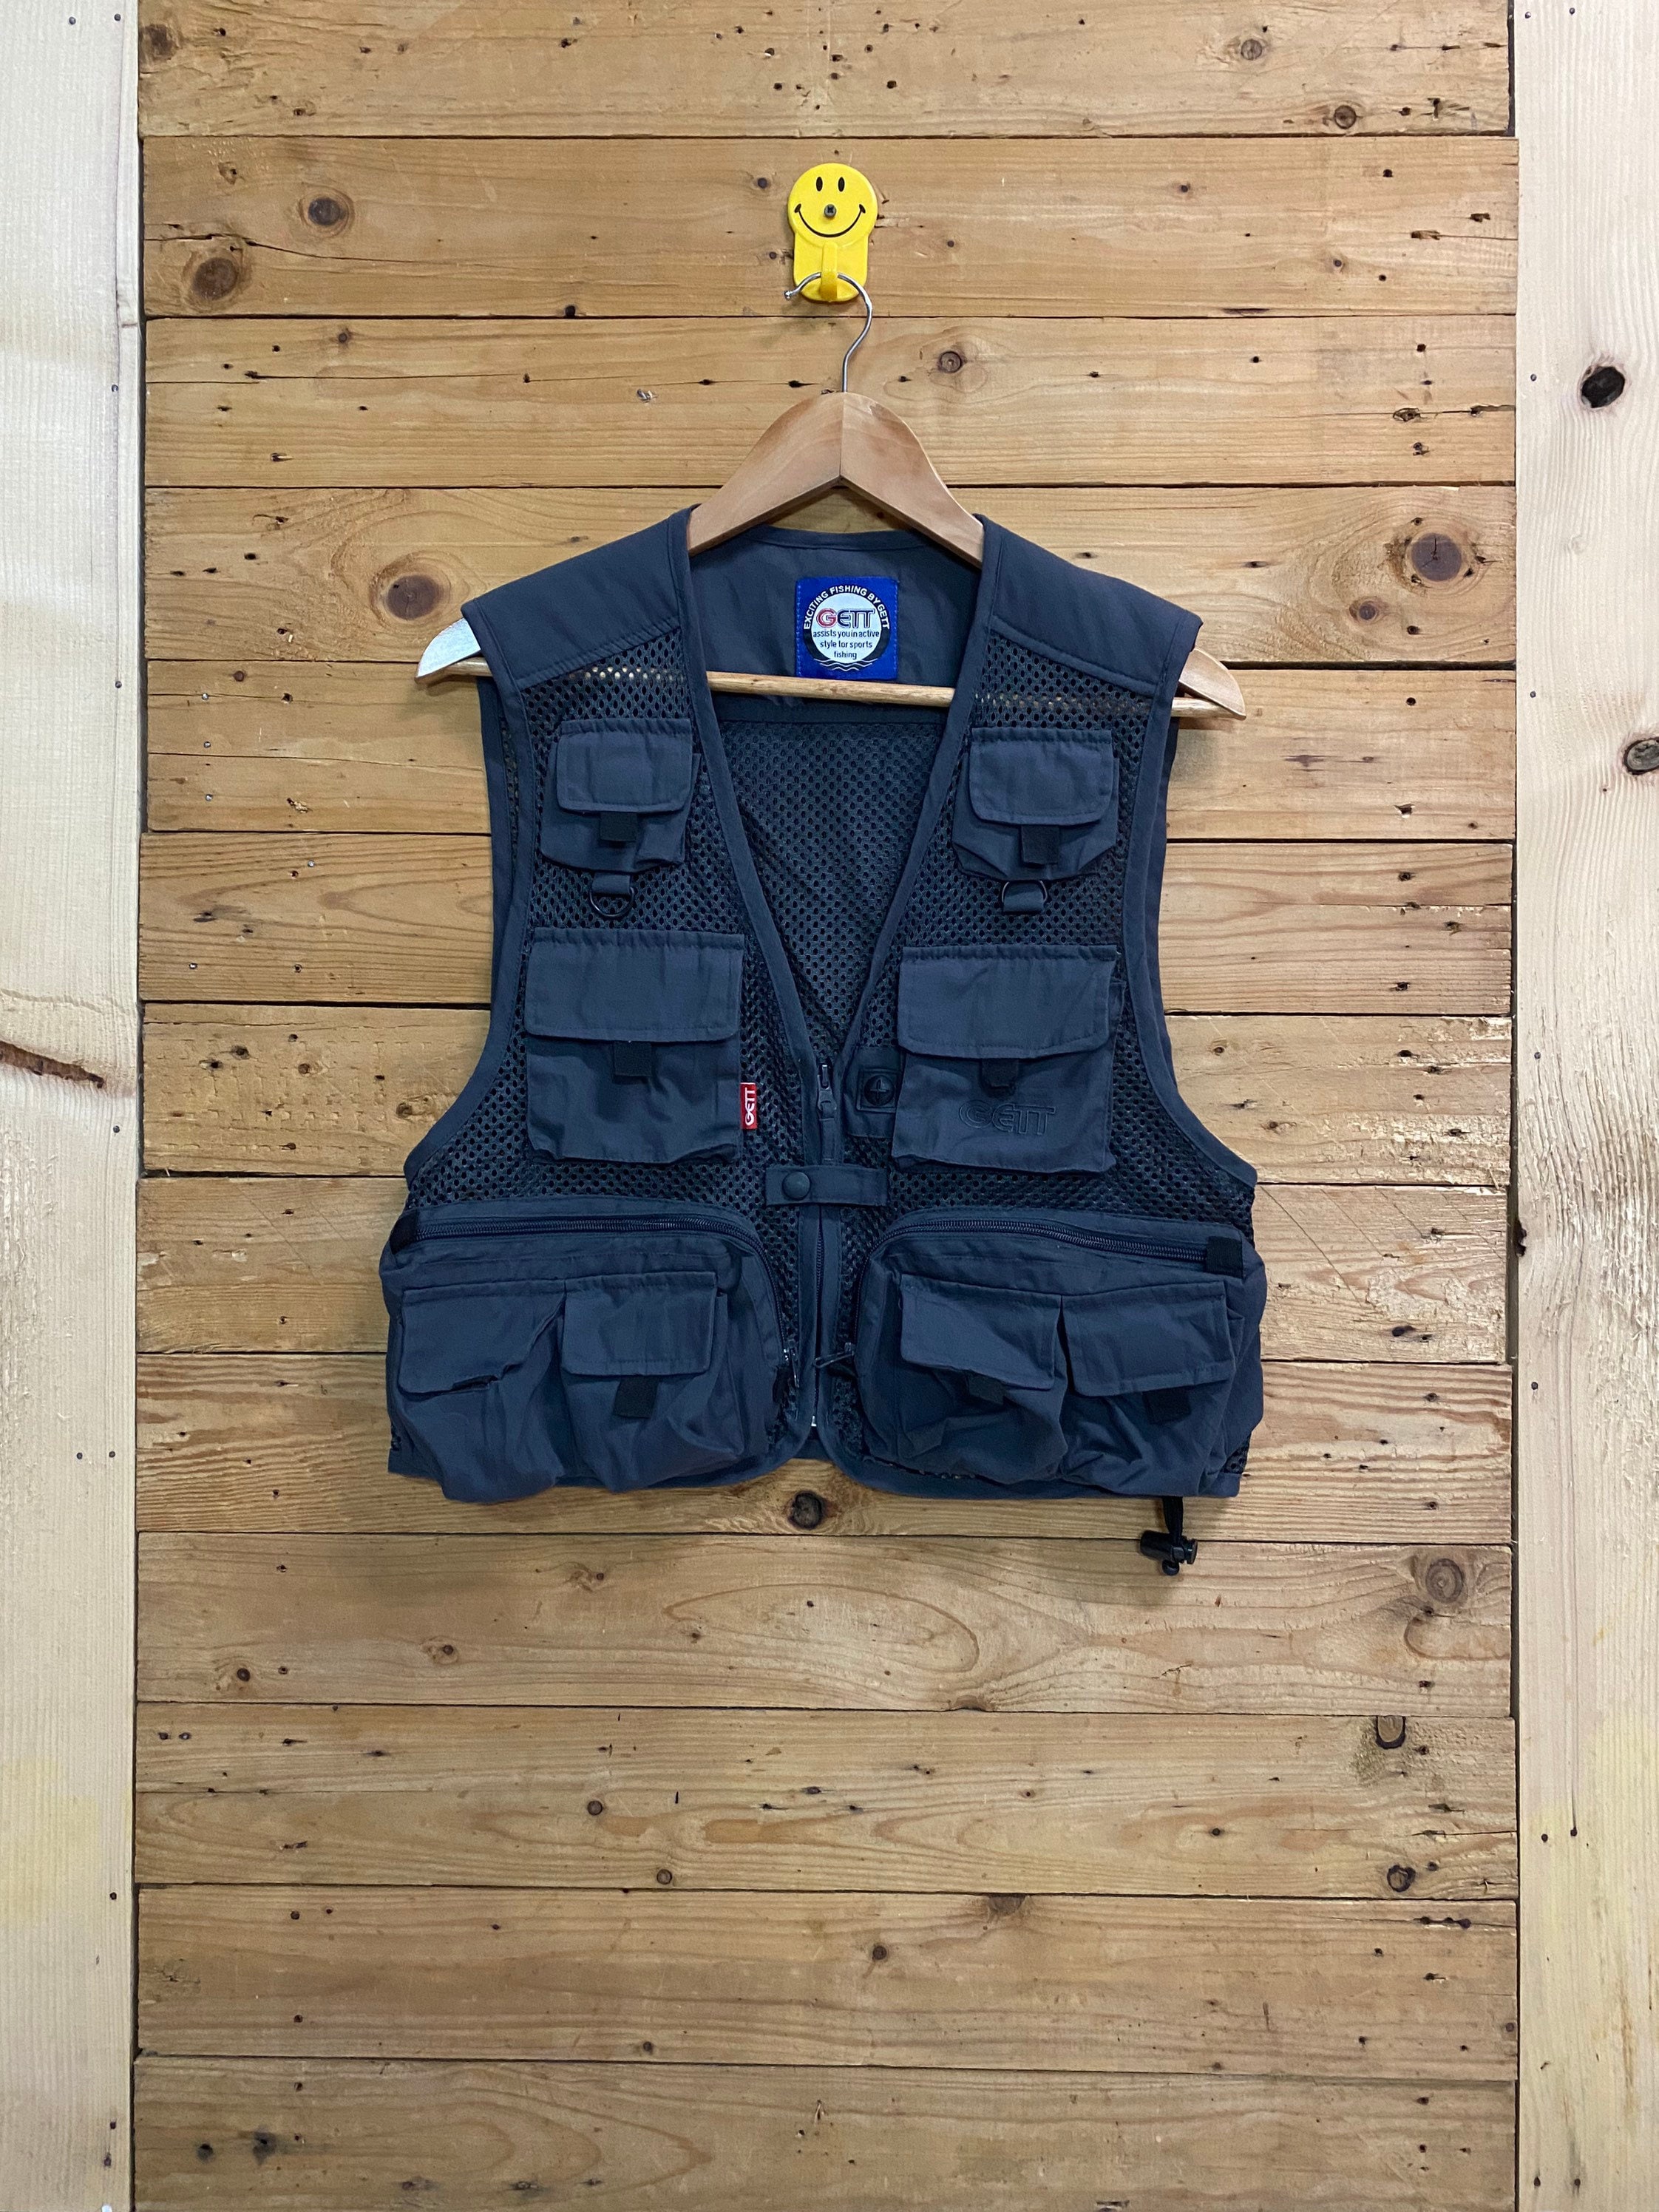 Vintage GETT fishing cargo utility vest size M fits S